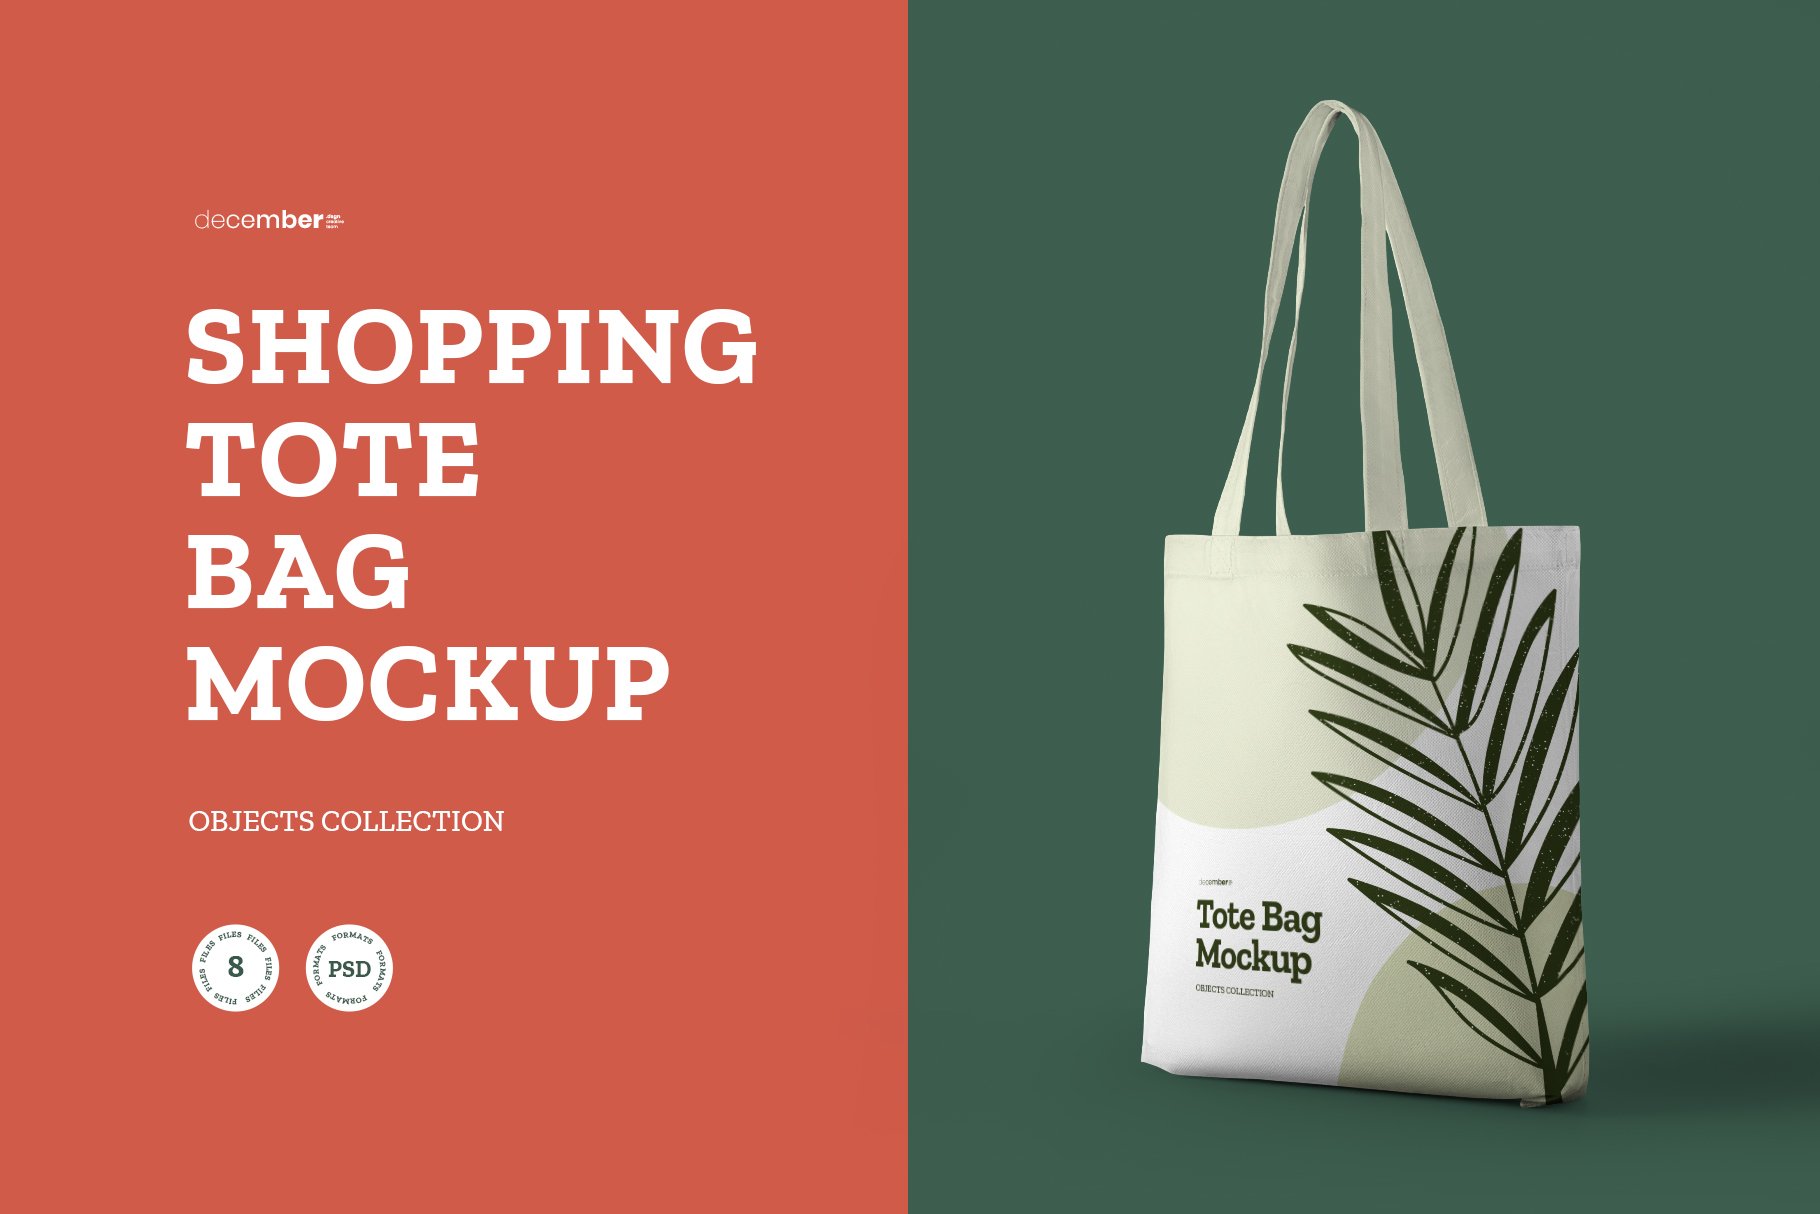 8 Shopping Tote Bag Mockups cover image.